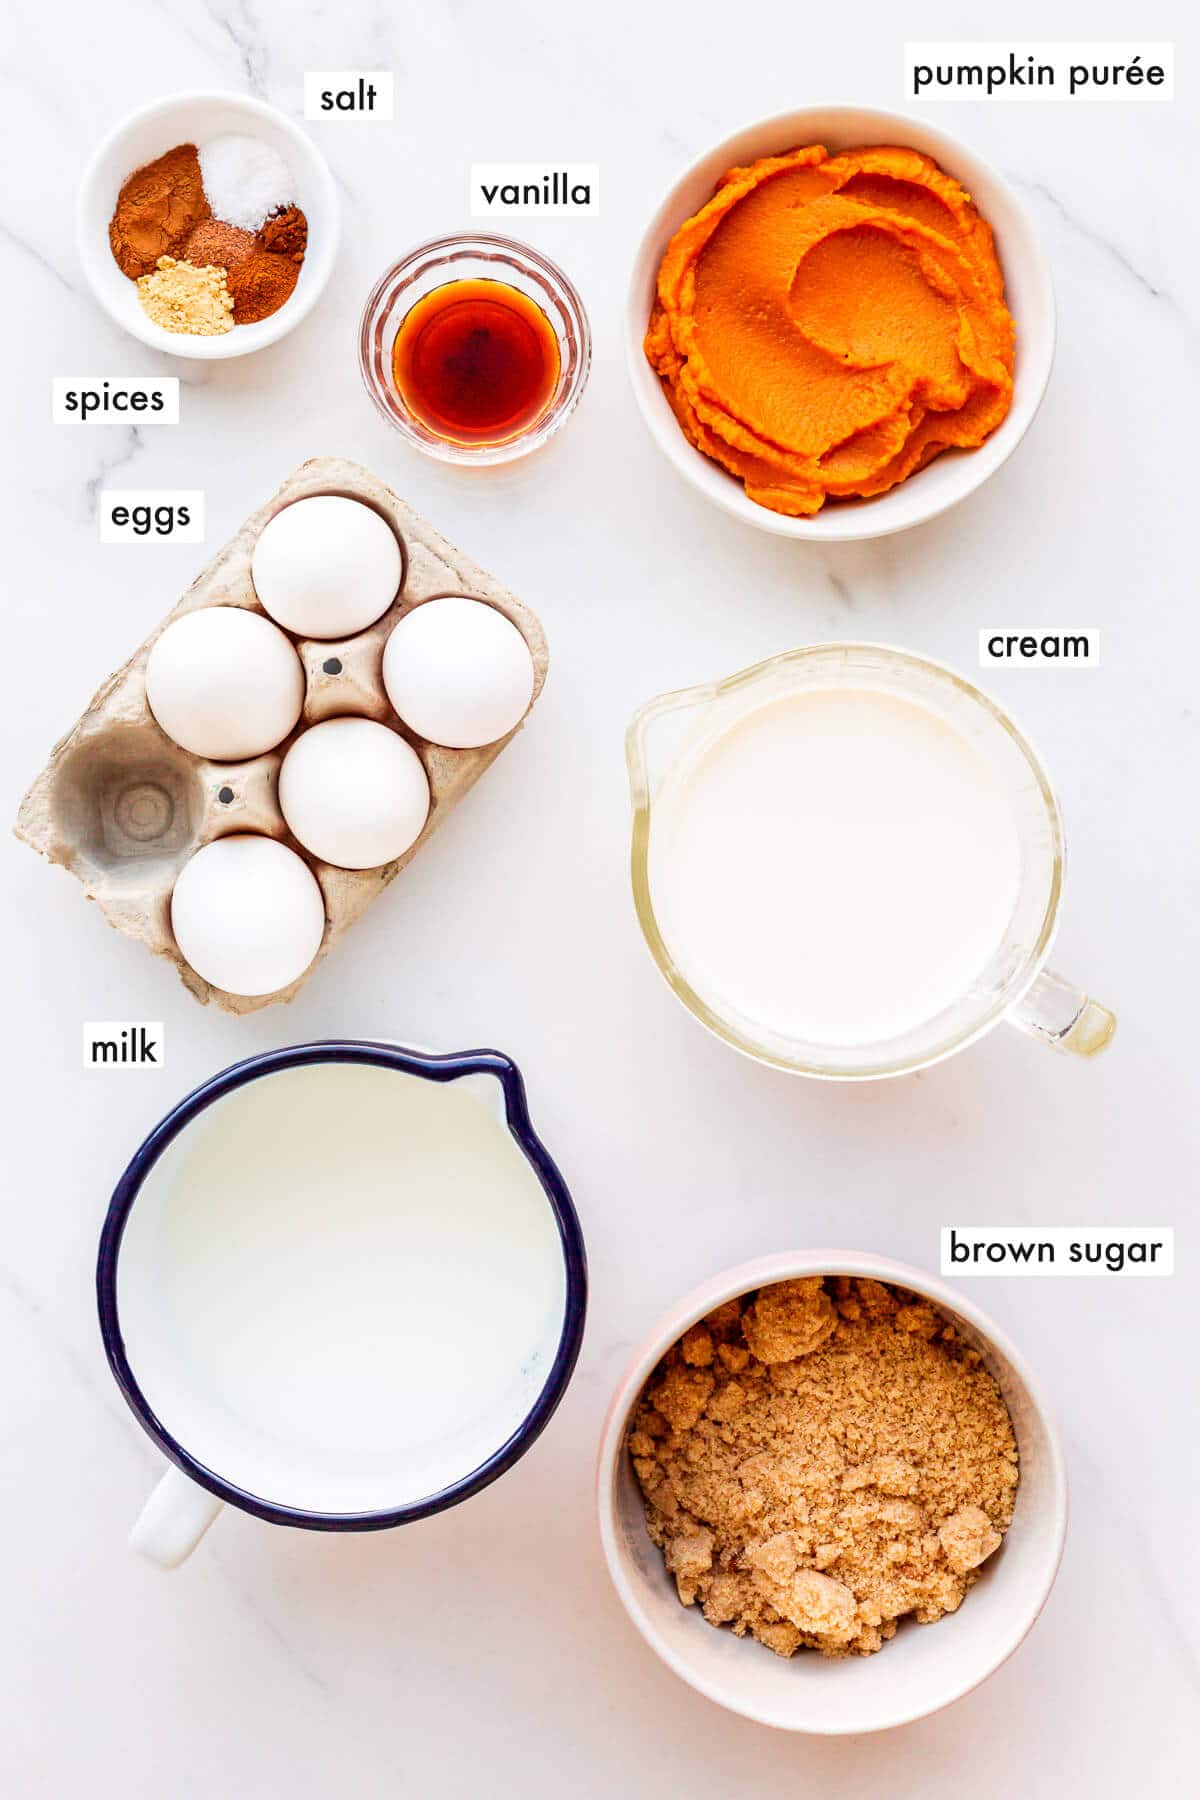 Ingredients to make pumpkin ice cream from scratch.